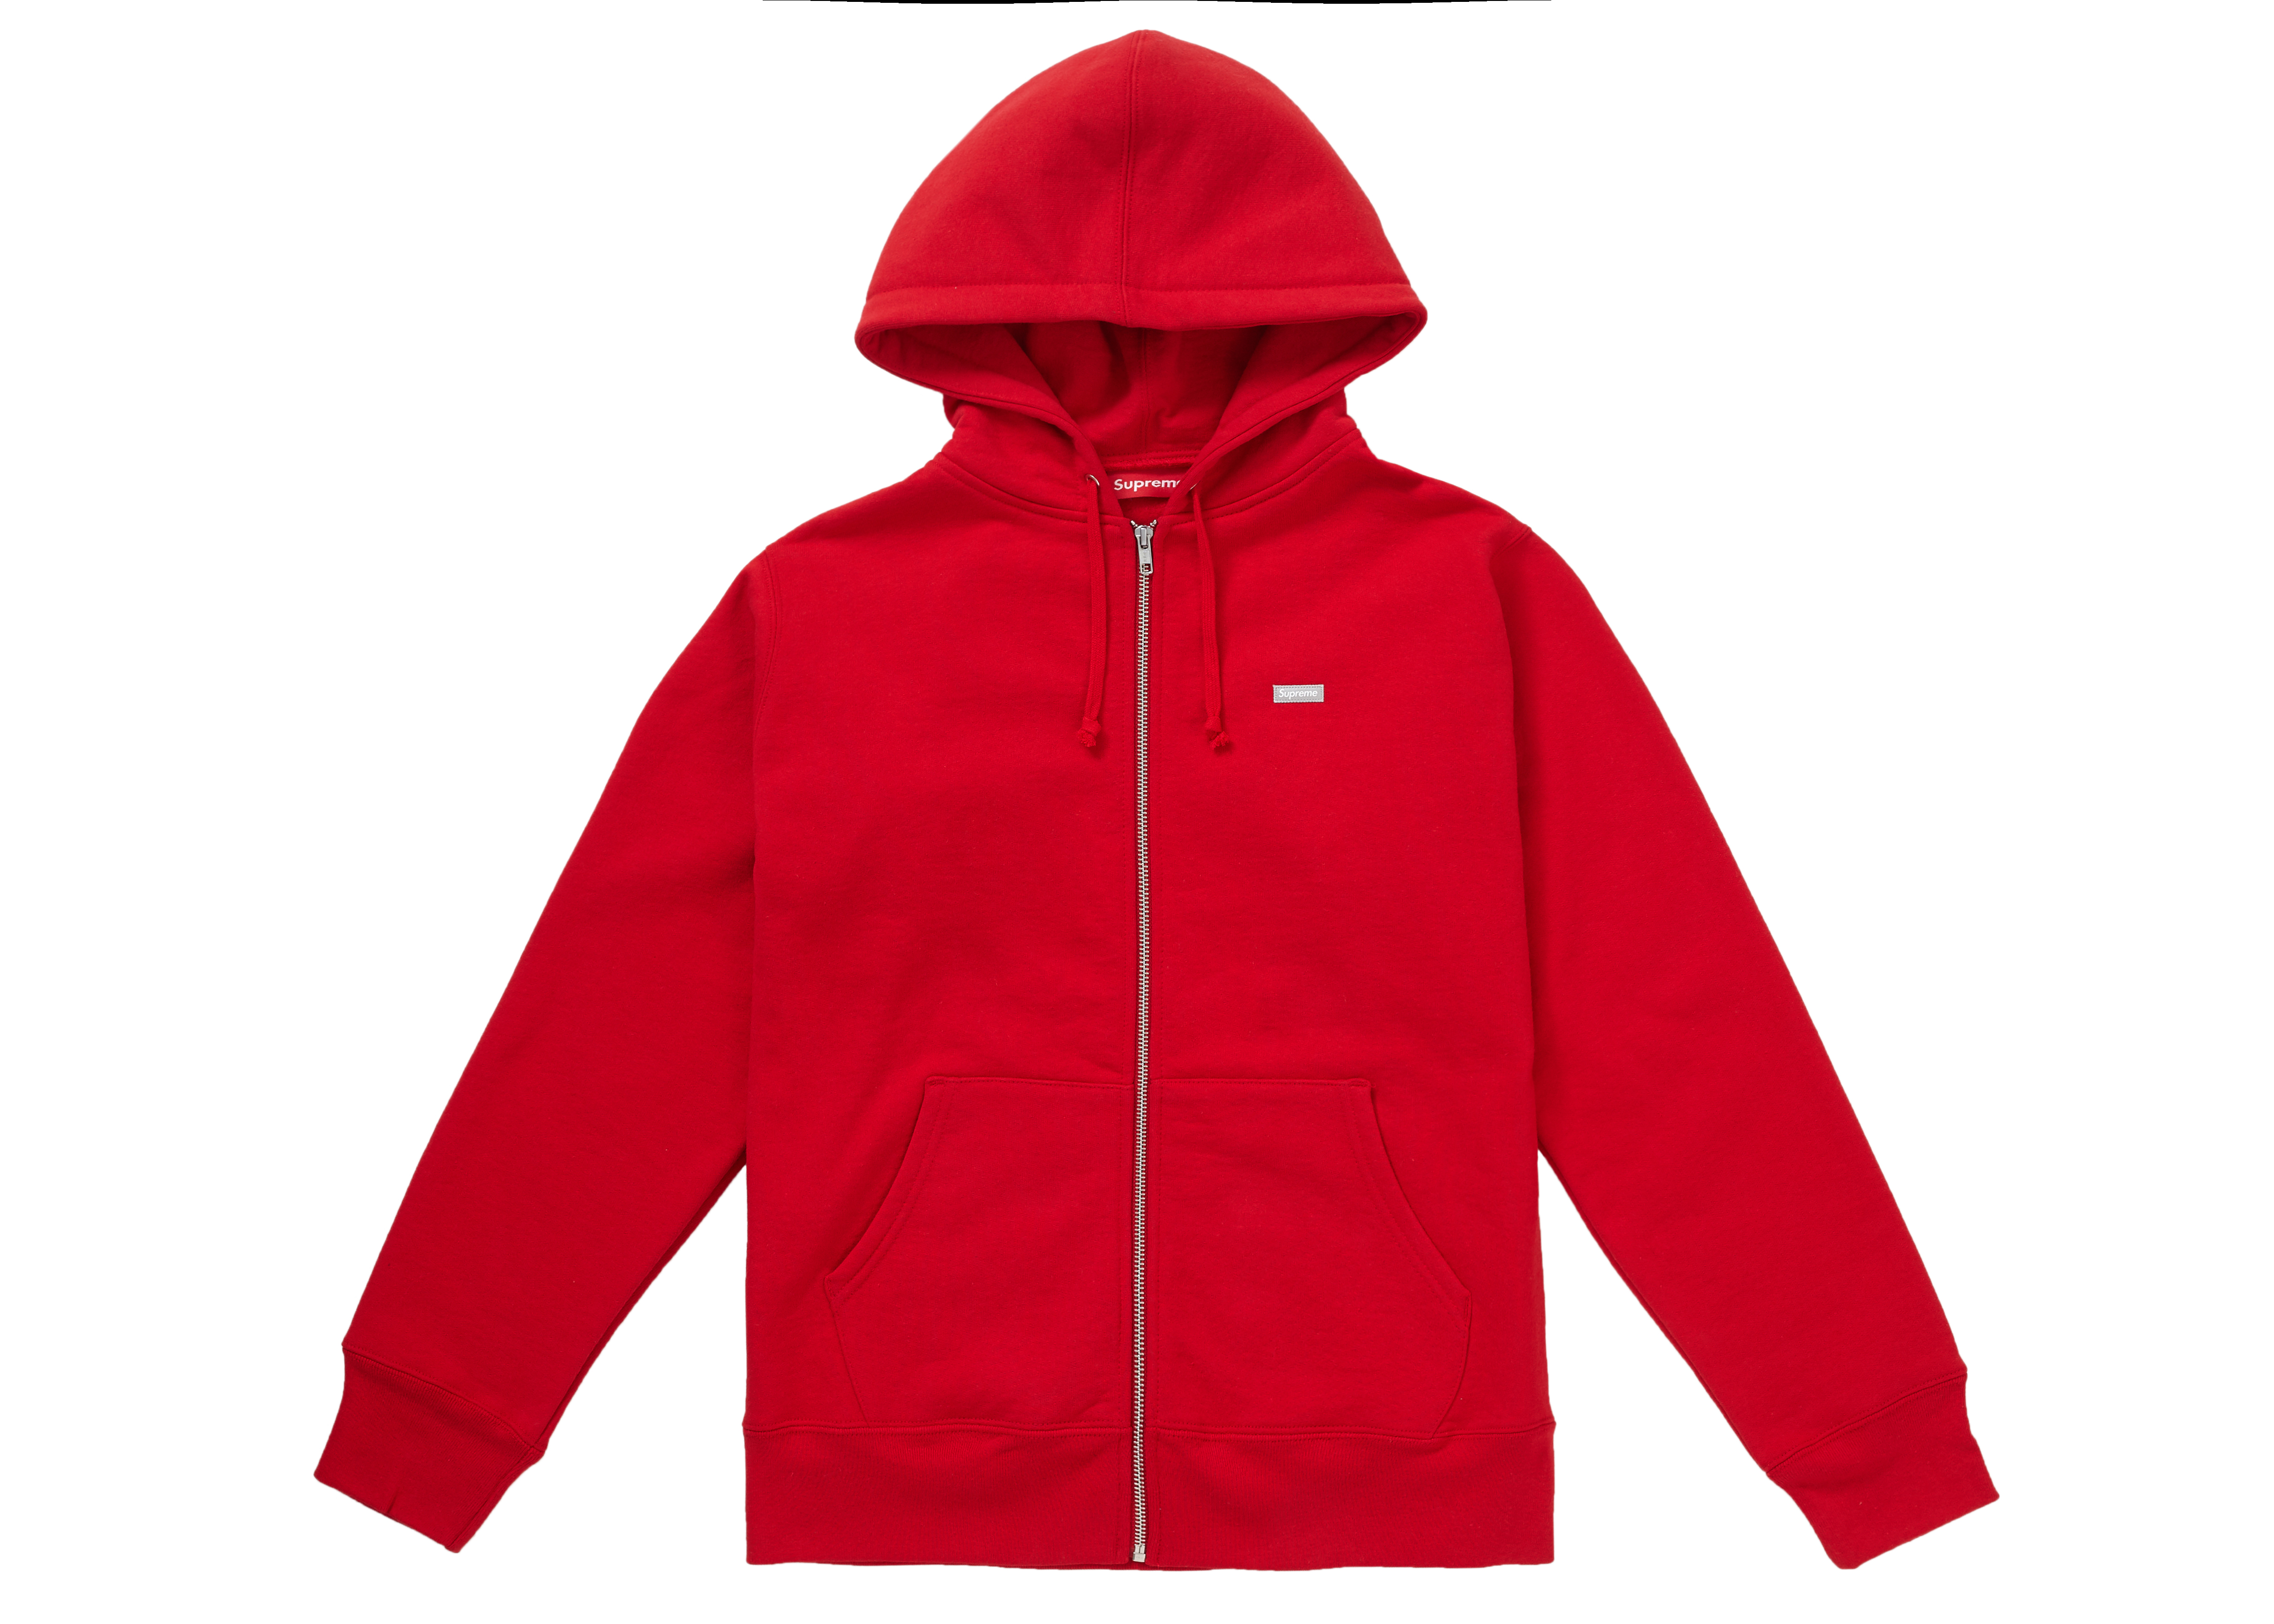 Supreme Reflective Small Box Zip Up Sweatshirt Red - FW18 メンズ - JP